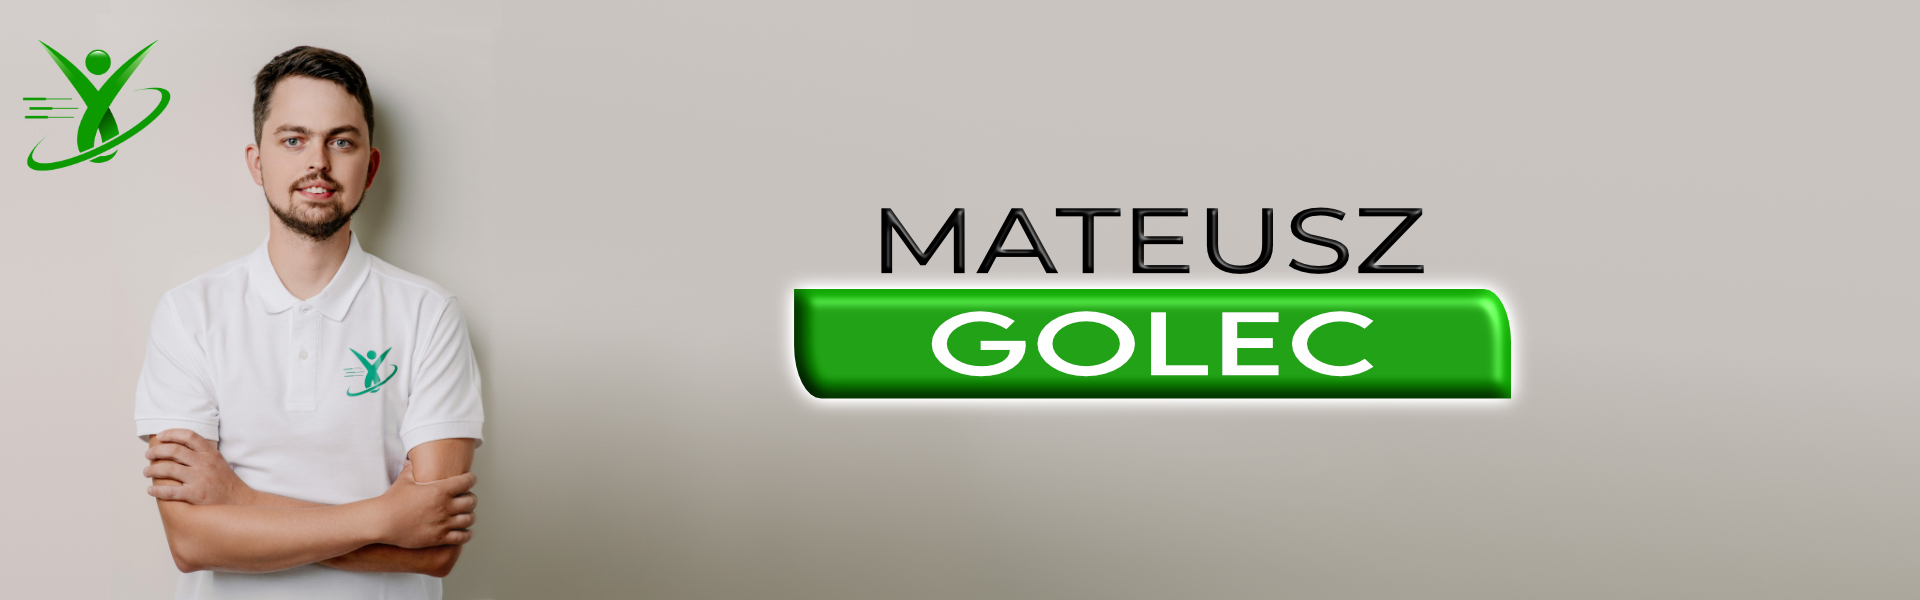 Mateusz Golec